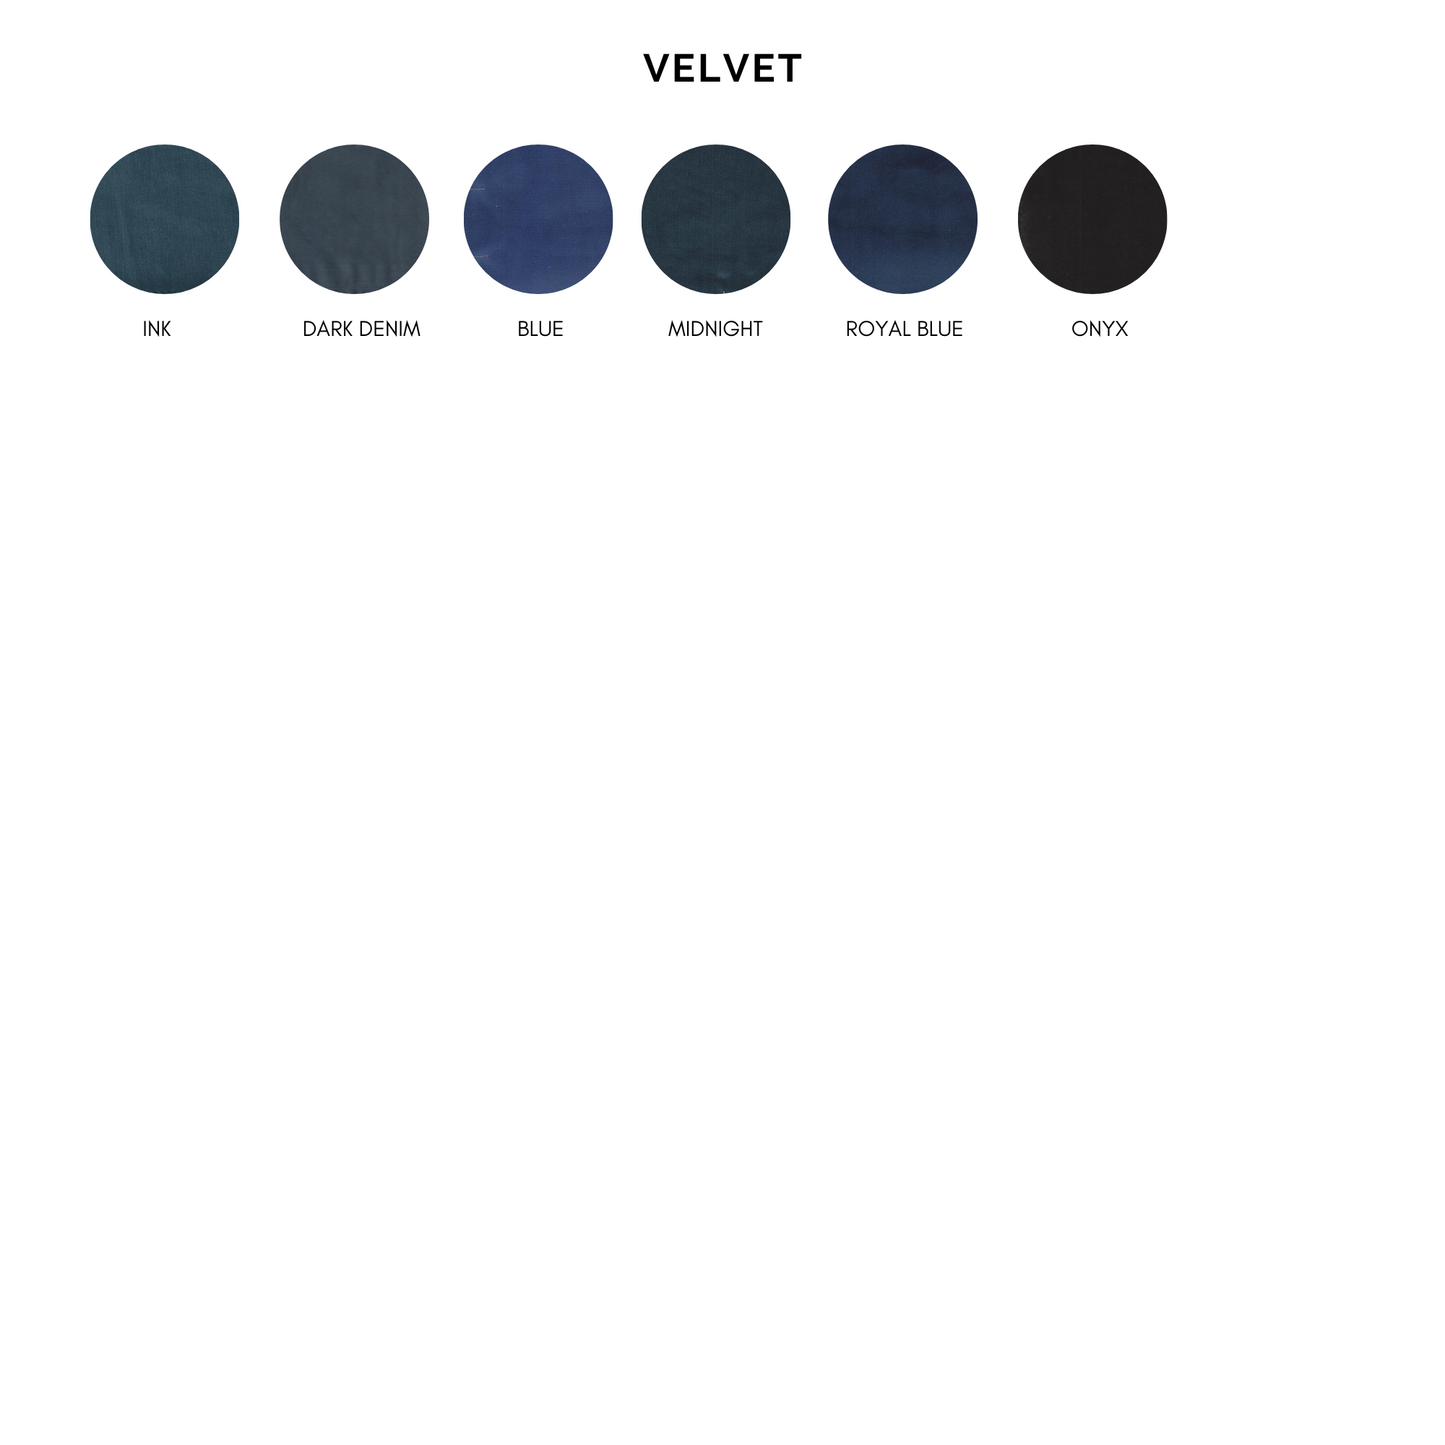 Kloof Sofa - Velvet Fabric - Elula Furniture